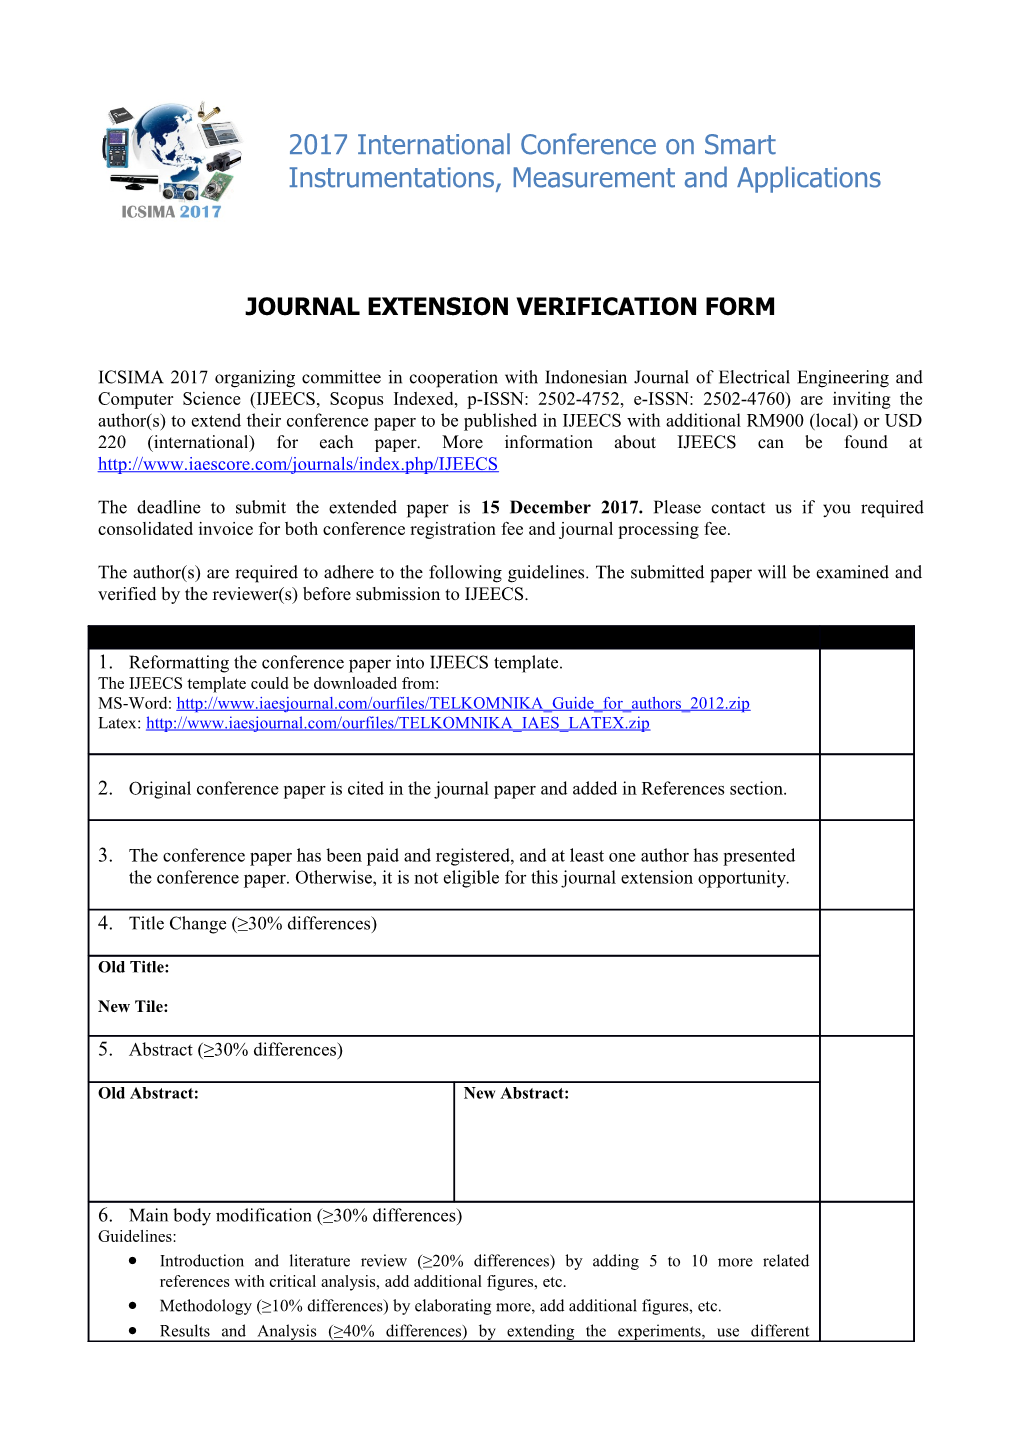 Journal Extension Verification Form